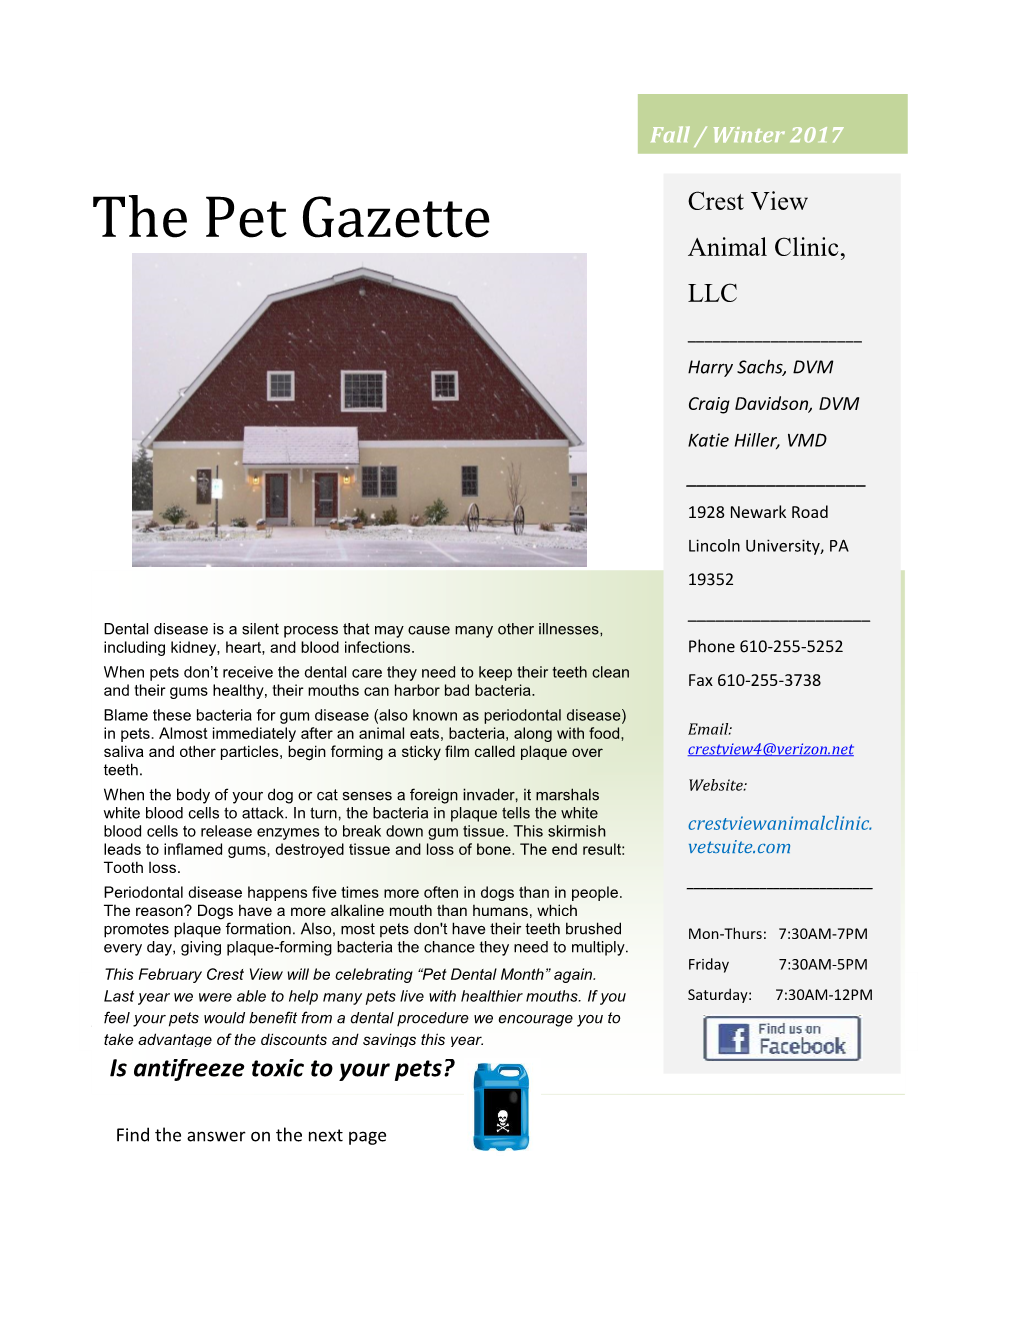 The Pet Gazette Animal Clinic, LLC